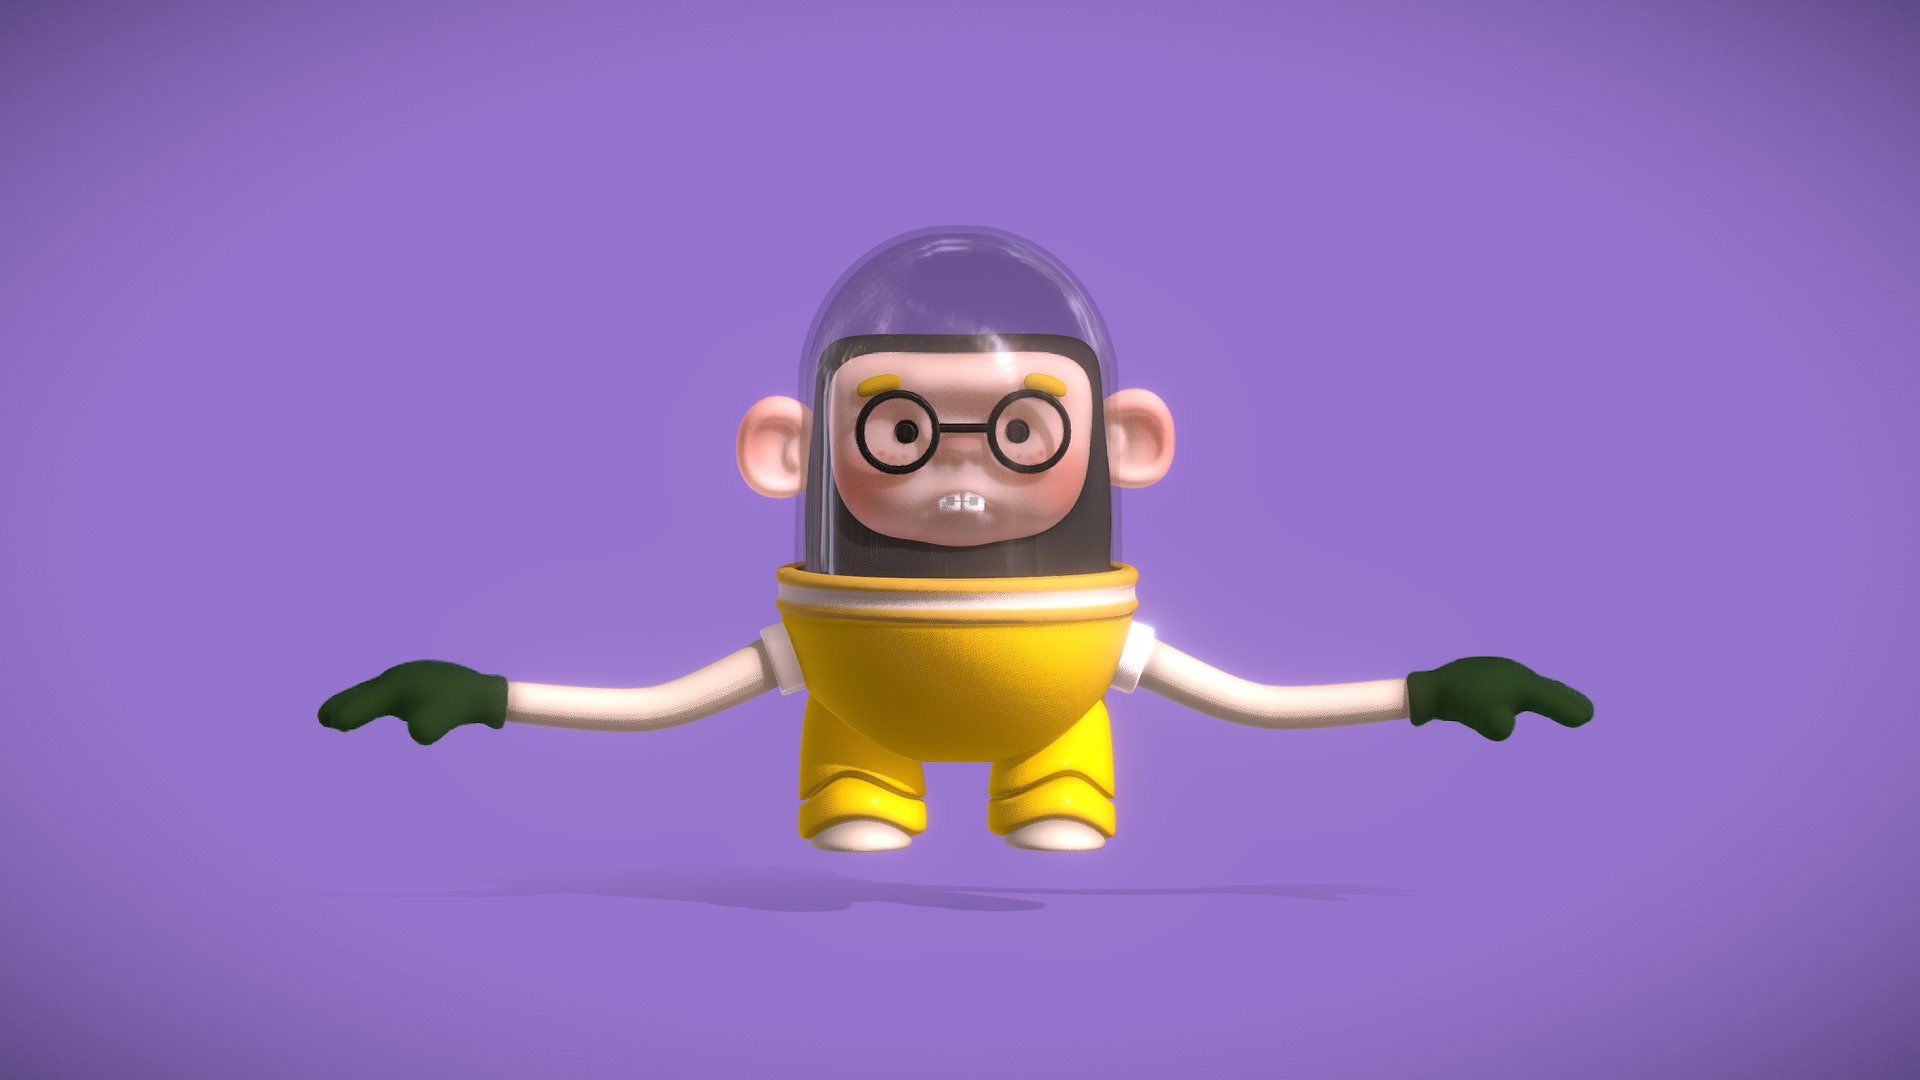 Made in ZBrush - Nerd Monkey - 3D model by DanbiPark 3d model